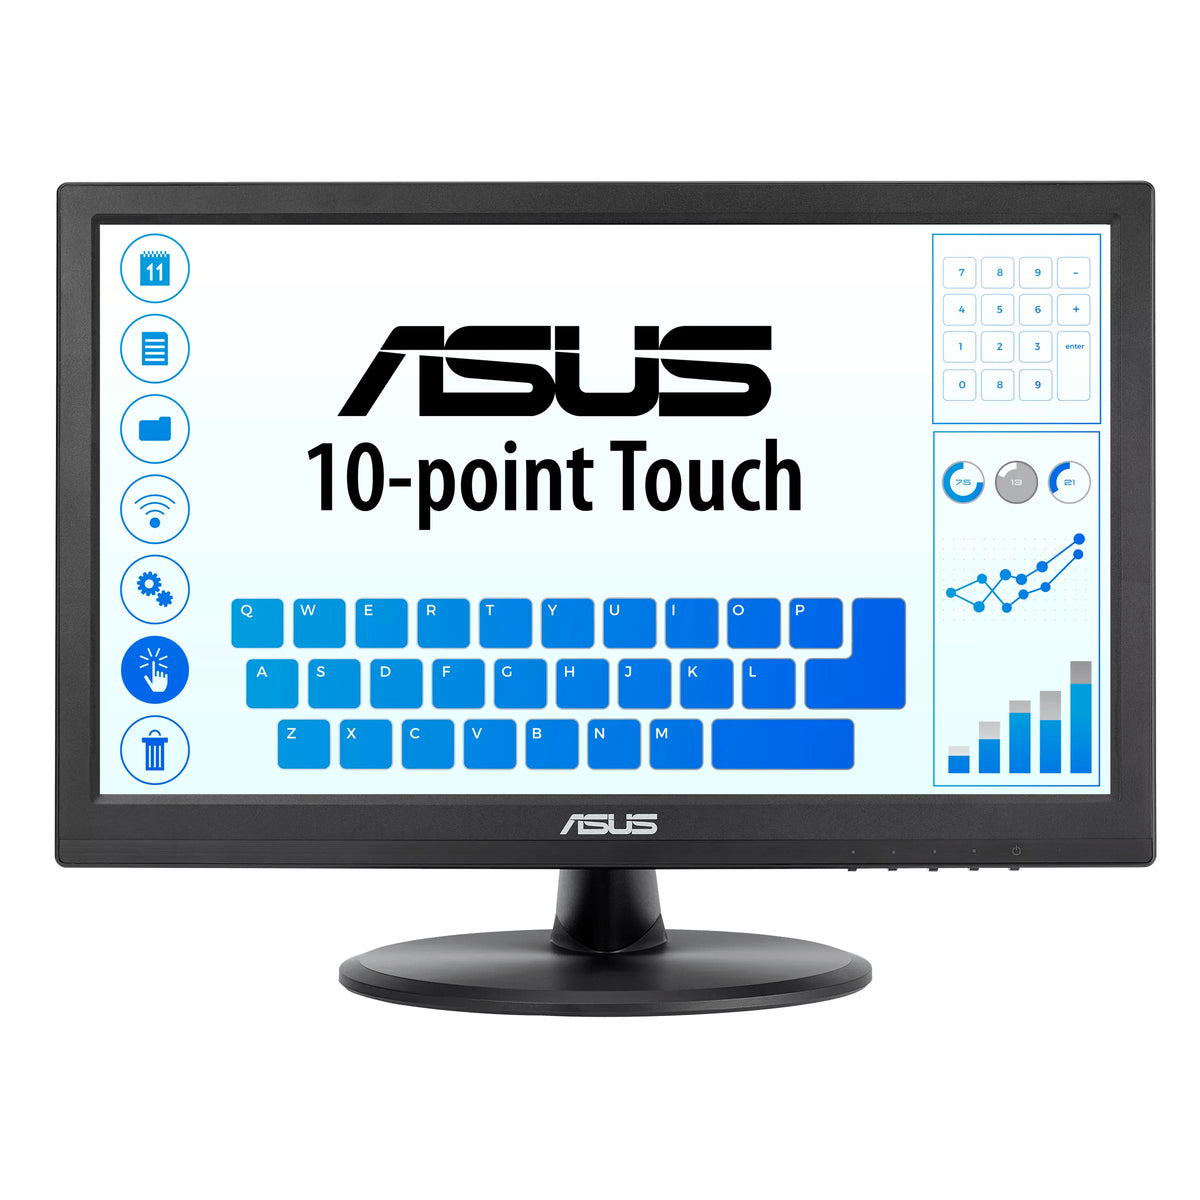 ASUS VT168HR - Monitor LED - 15.6" - pantalla táctil - 1366 x 768 WXGA @ 60 Hz - TN - 220 cd/m² - 400:1 - 5 ms - HDMI, VGA